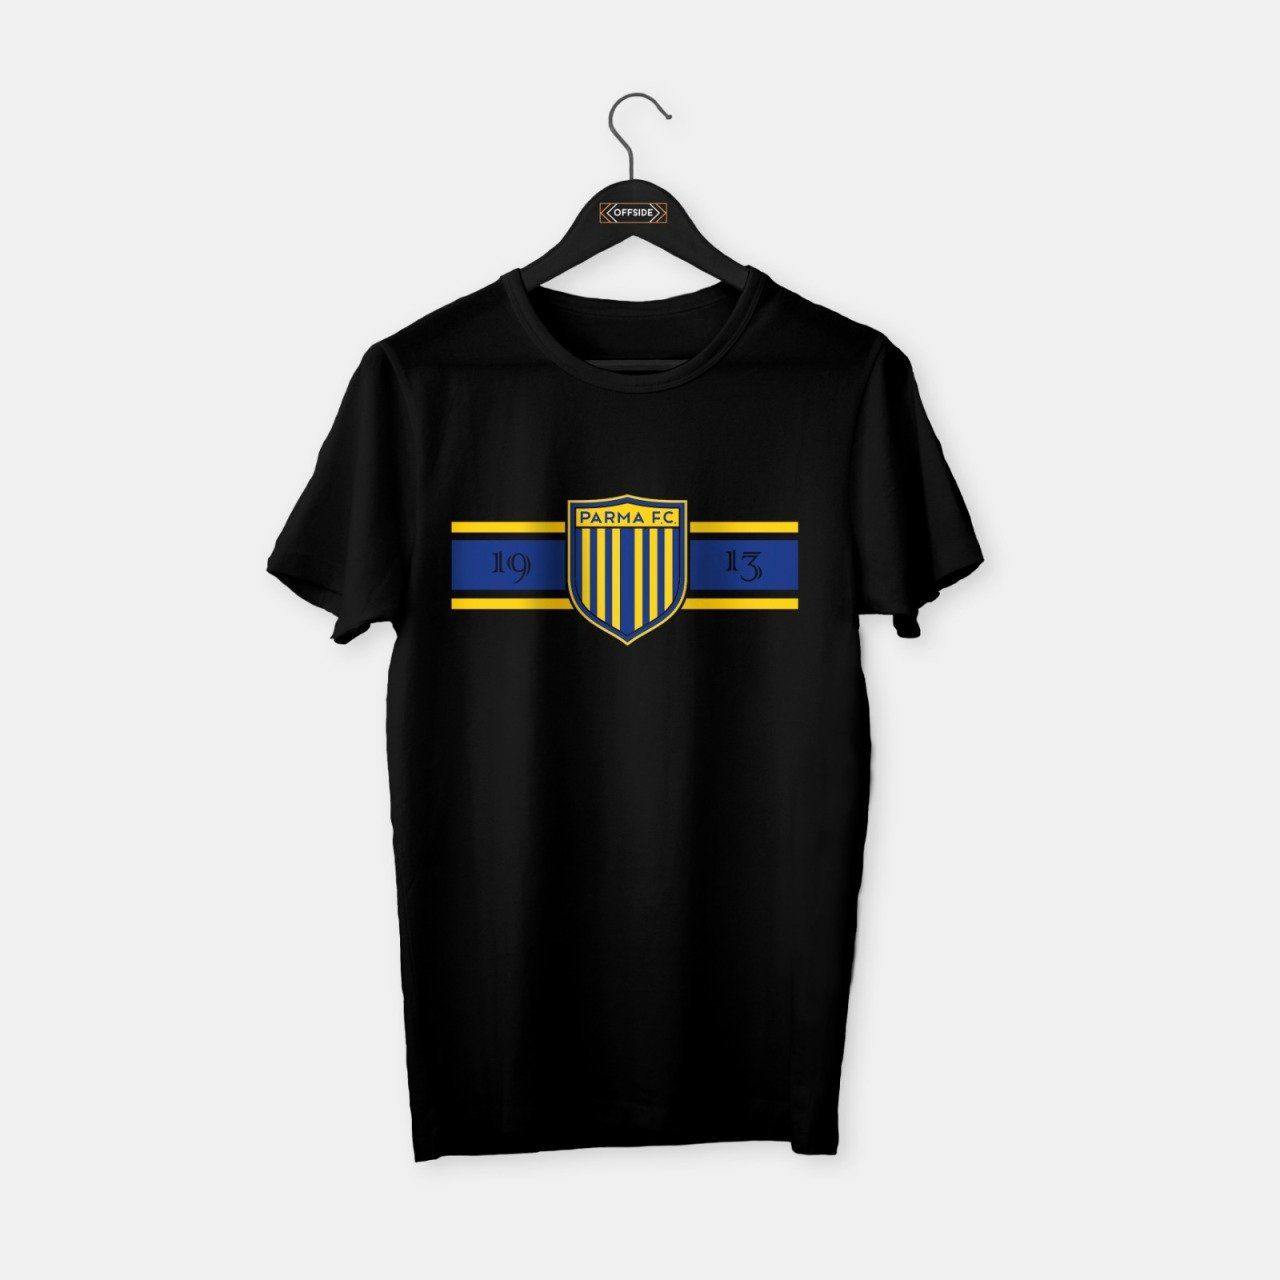 Parma T-shirt